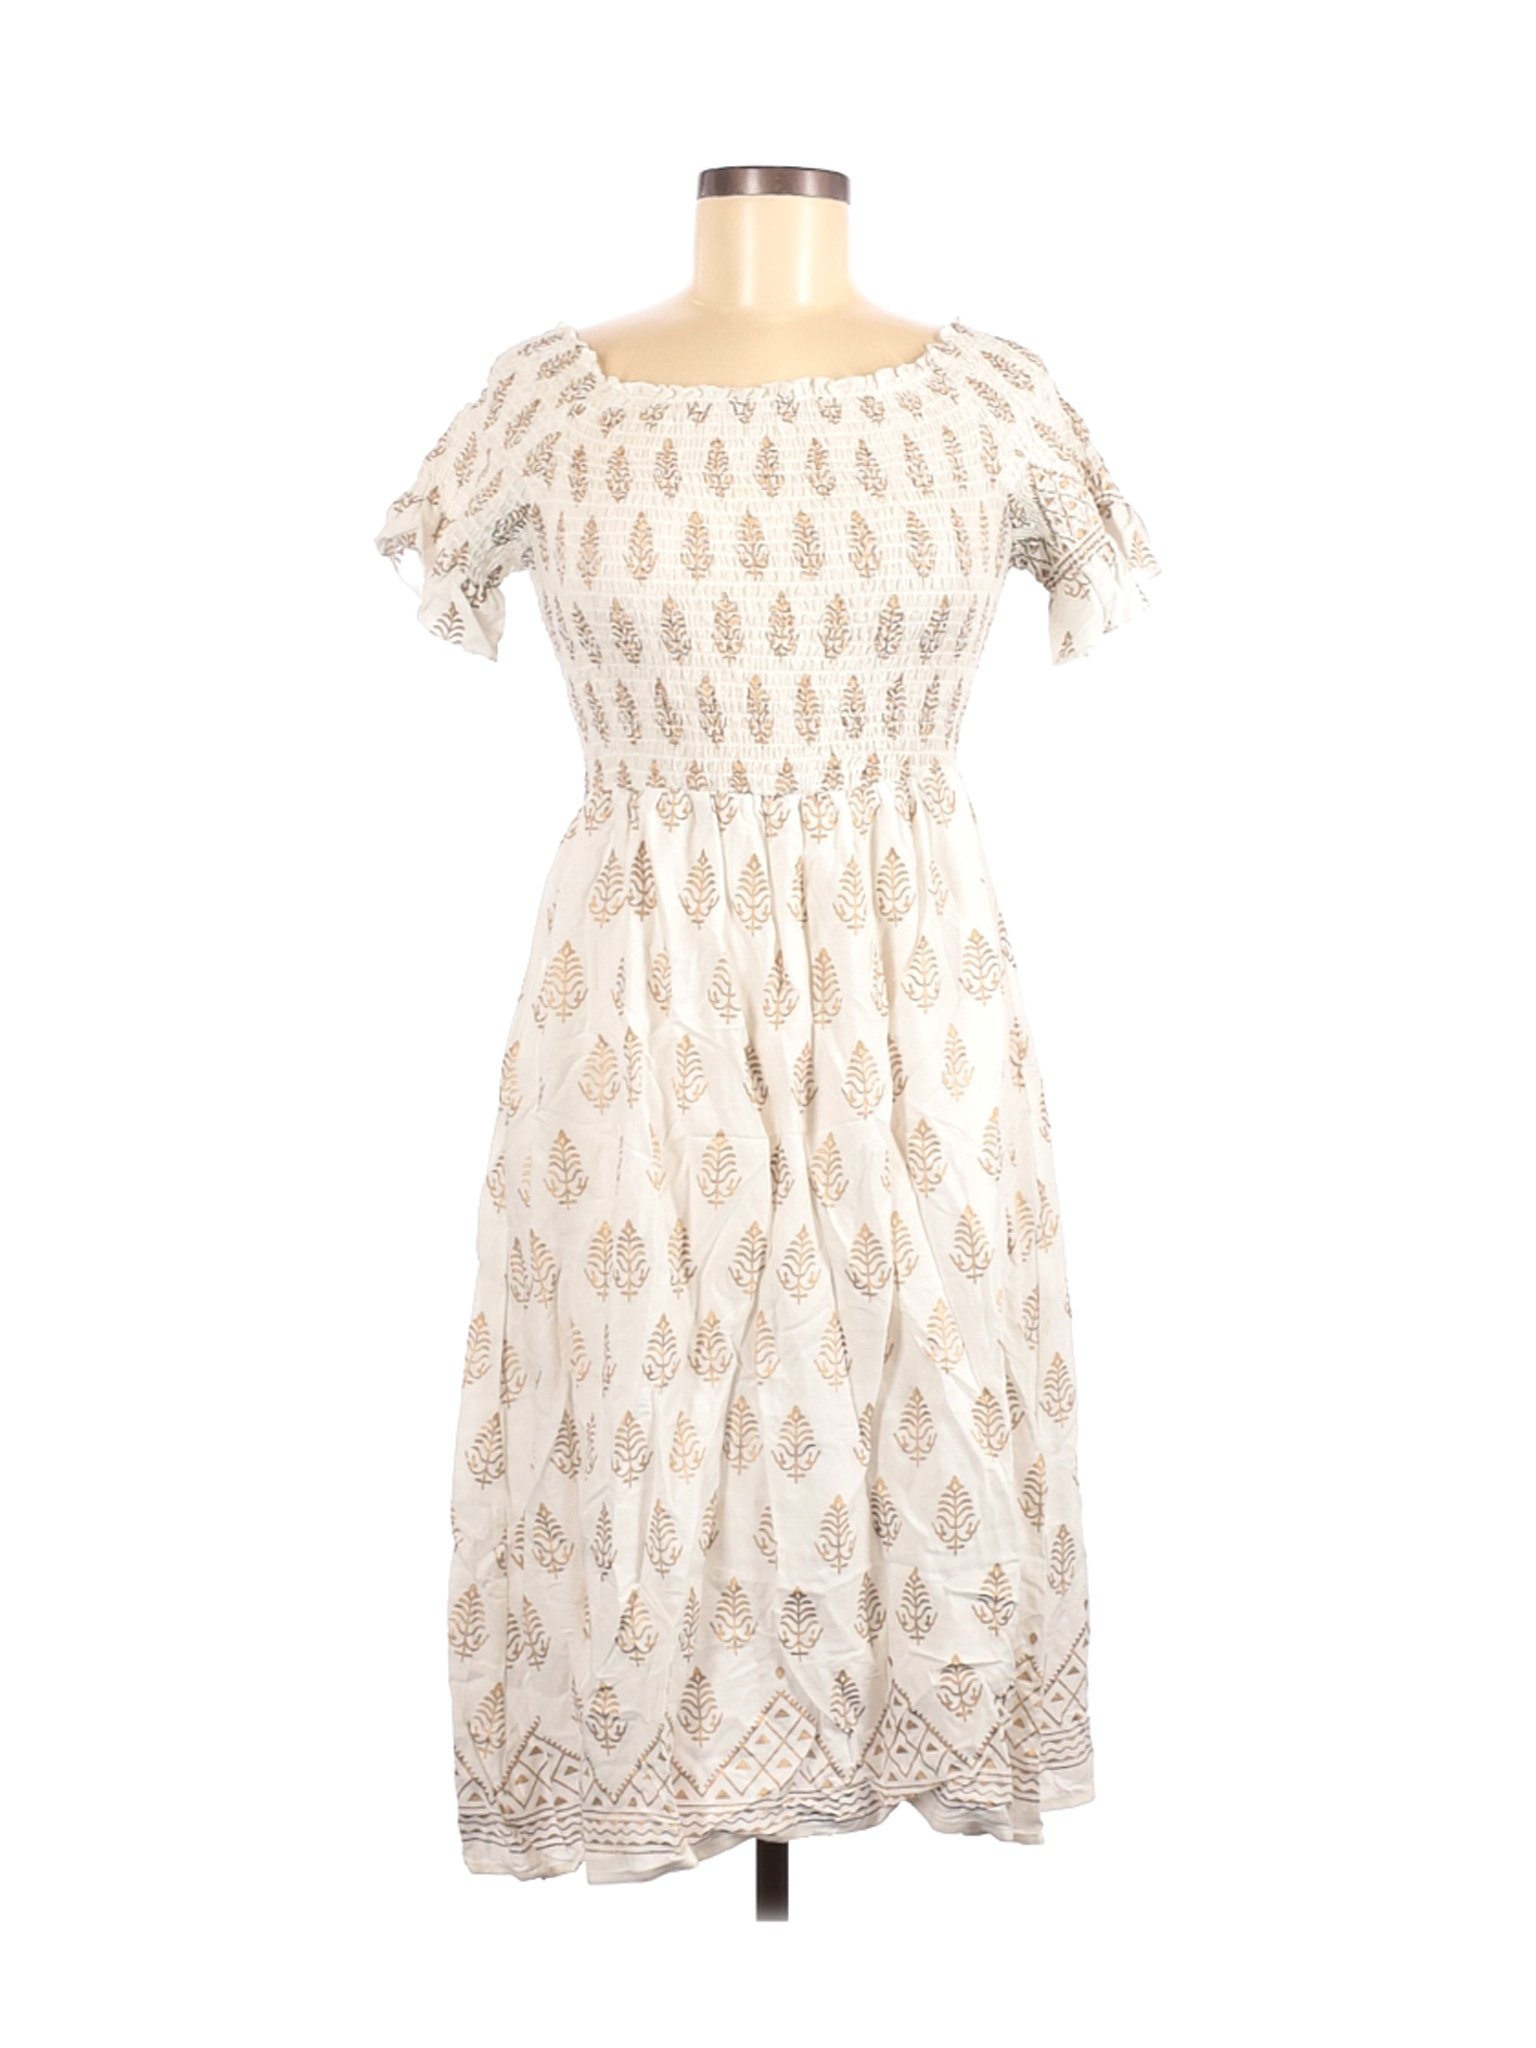 Lapogee Women Ivory Casual Dress L | eBay